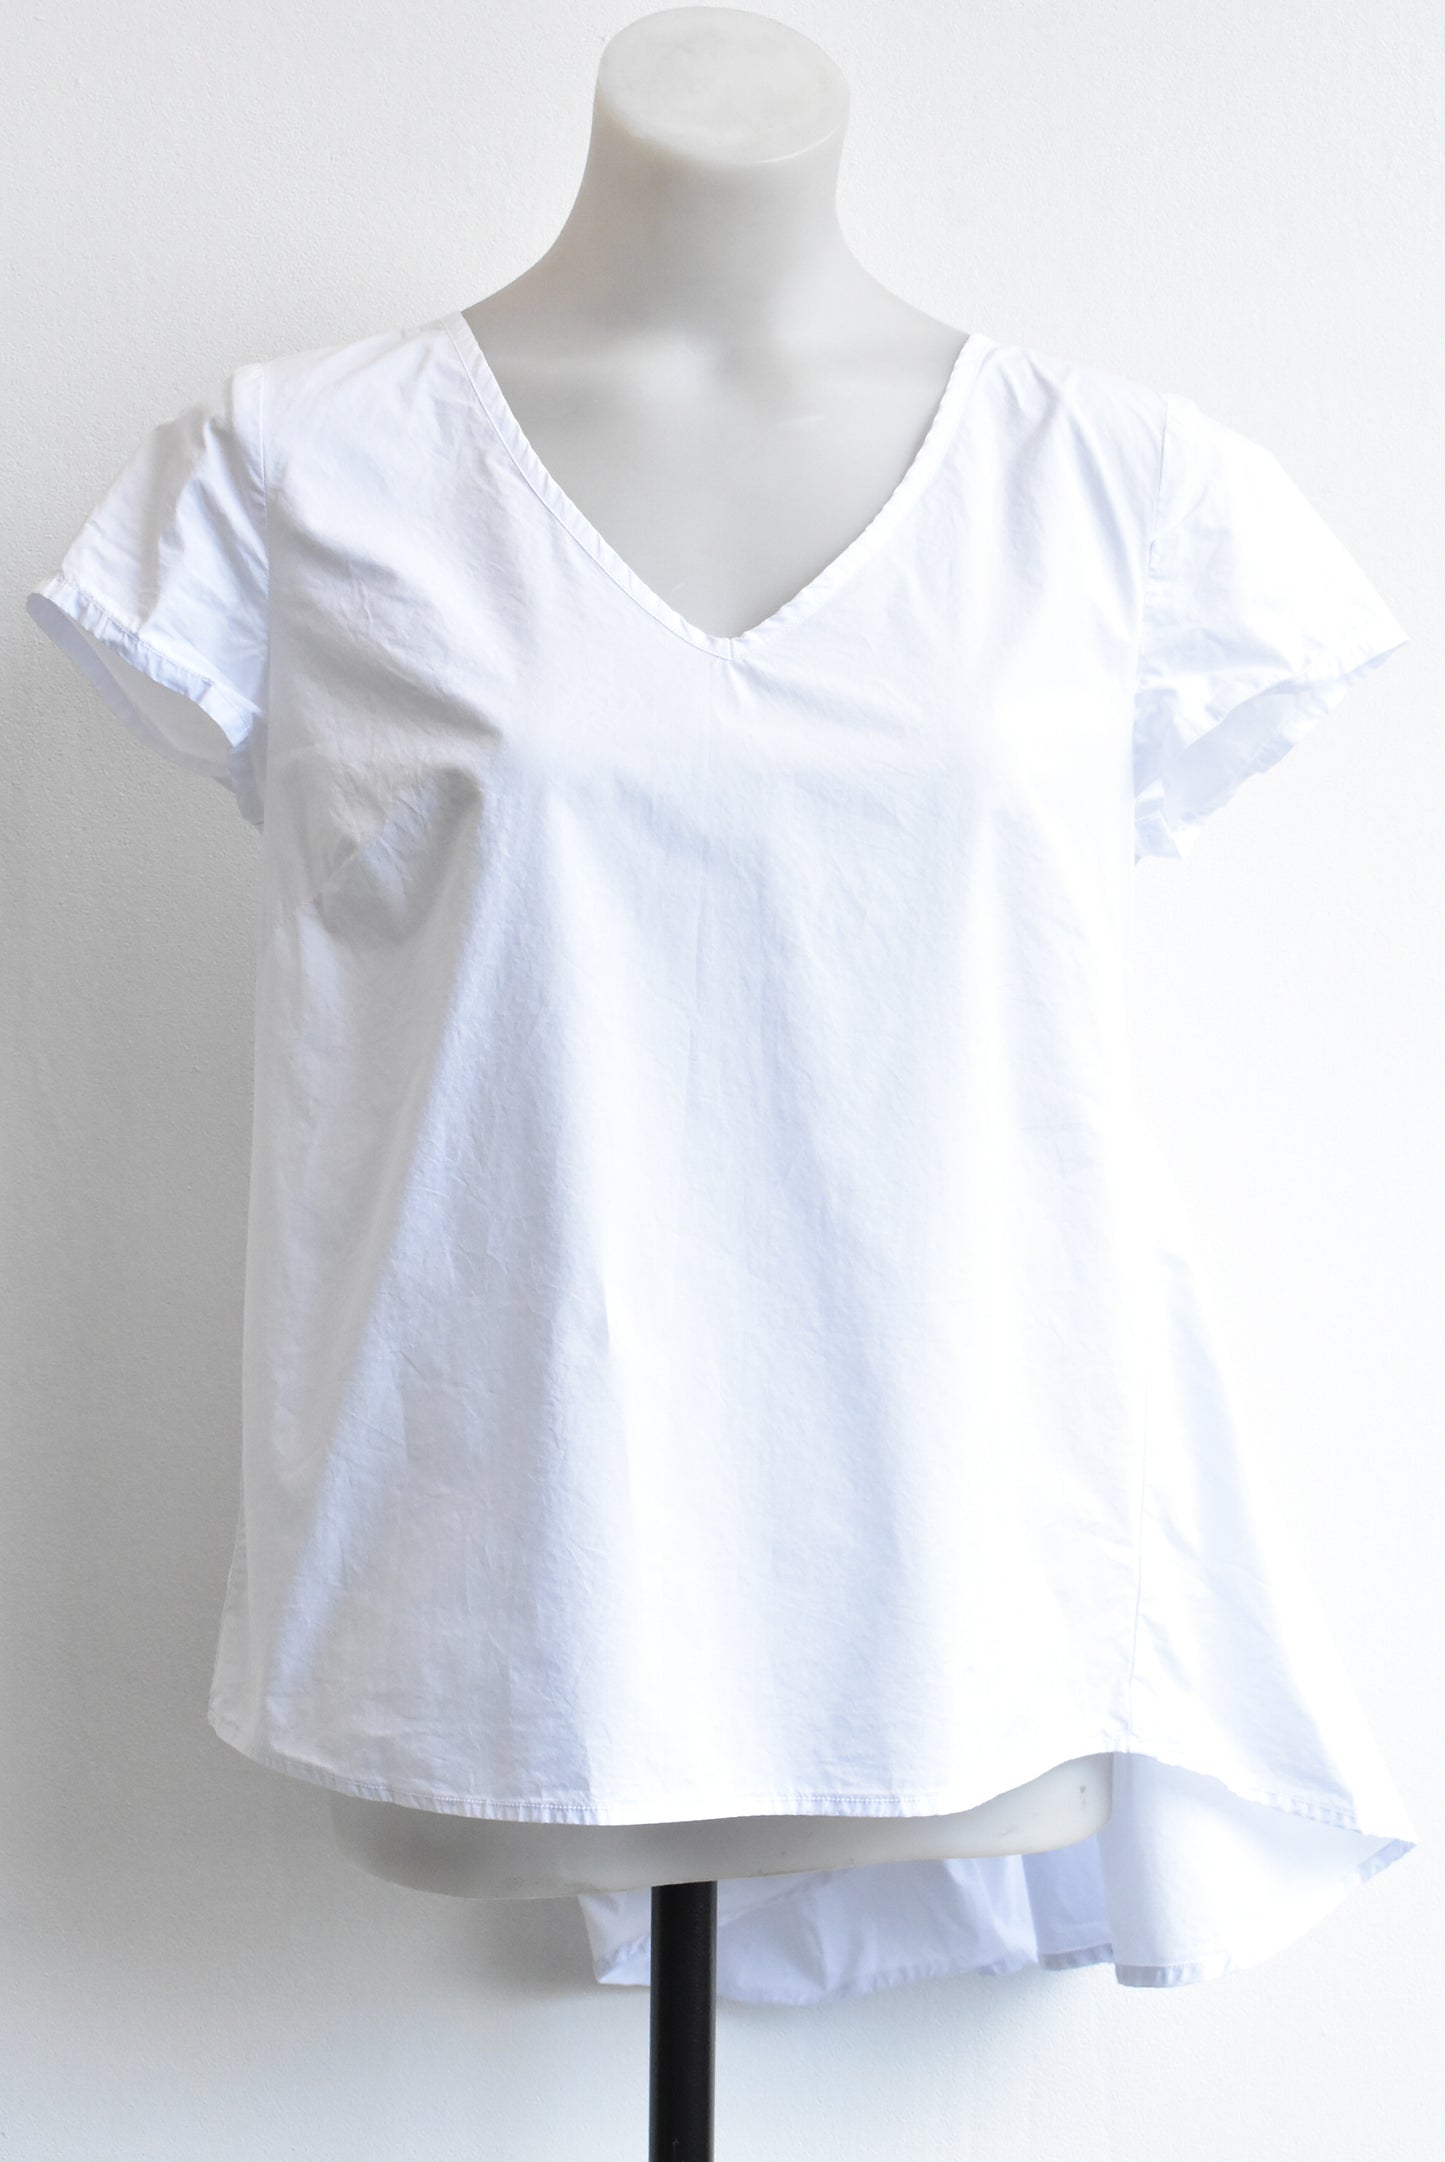 Ricochet white peasant blouse, size 6